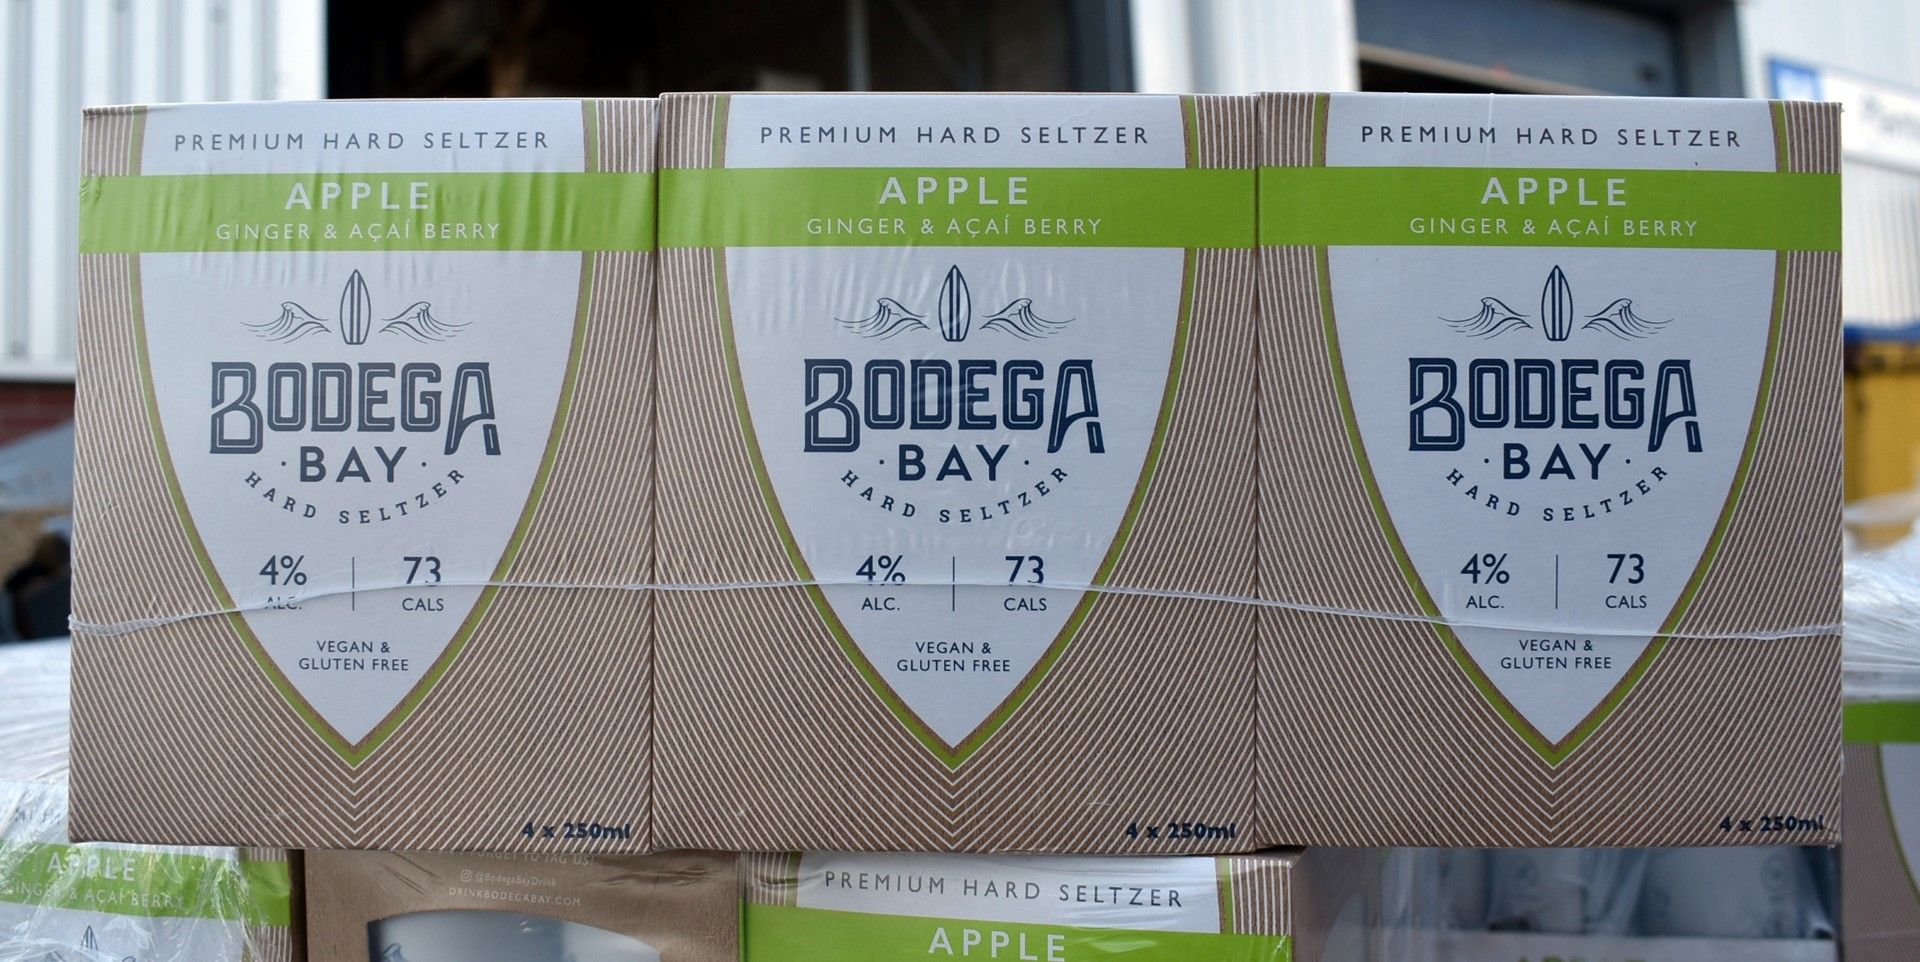 24 x Bodega Bay Hard Seltzer 250ml Alcoholic Sparkling Water Drinks - Apple Ginger & Acai Berry - 4% - Image 10 of 10